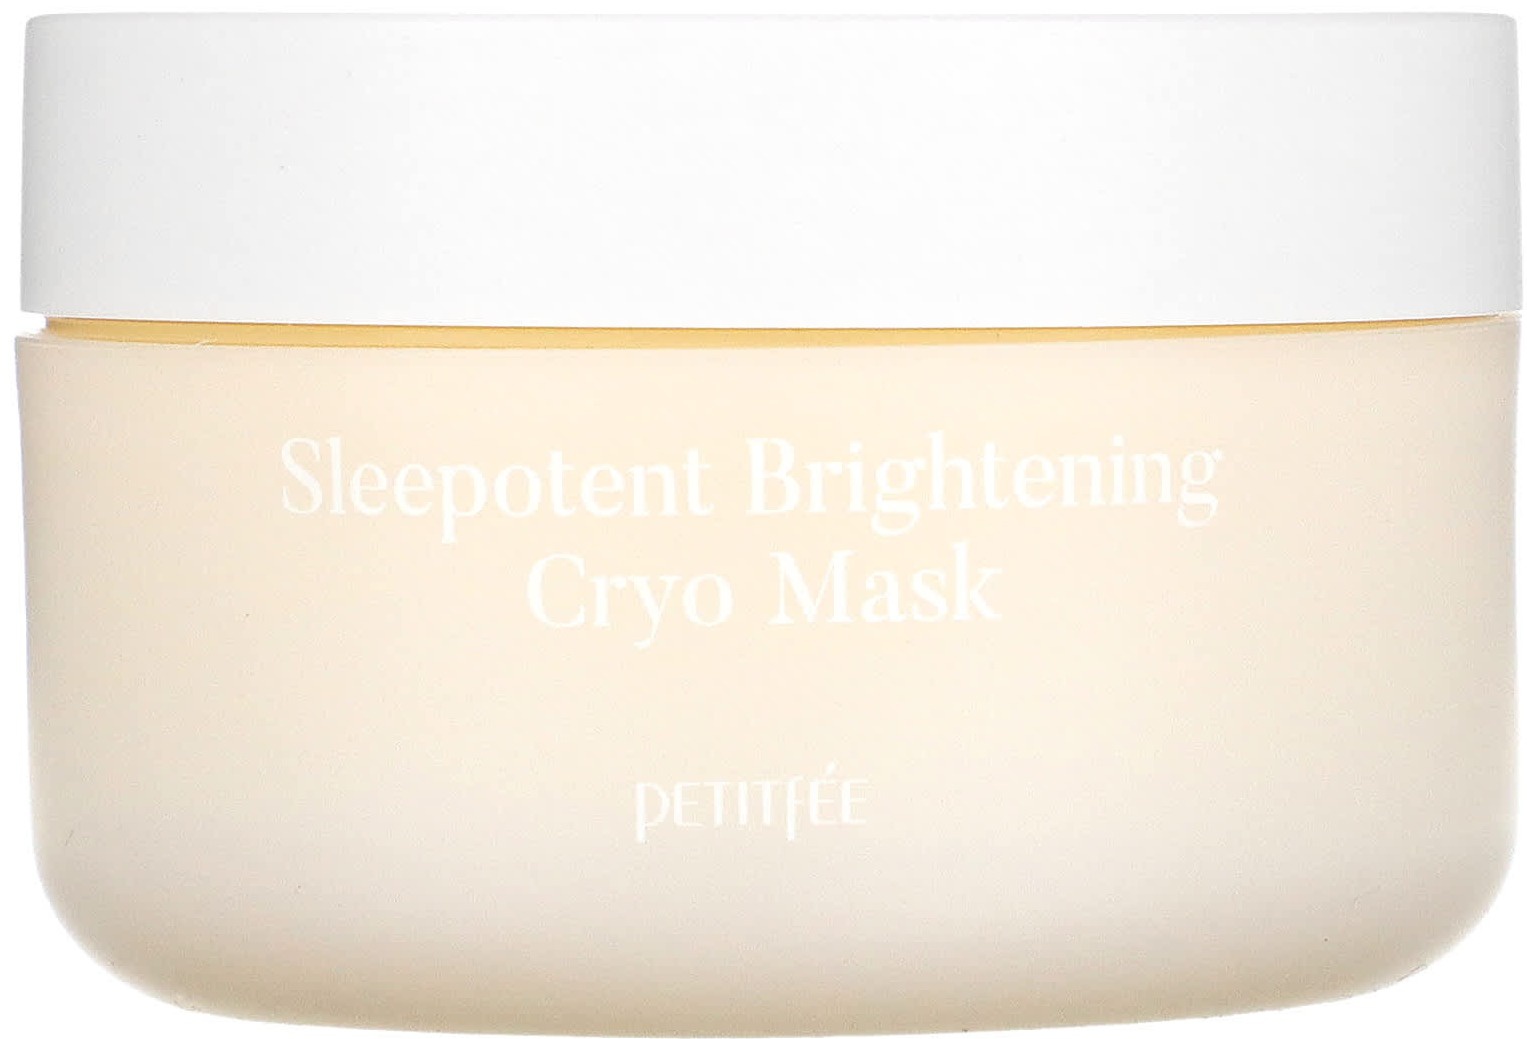 Petitfee Sleepotent Brightening Cryo Mask